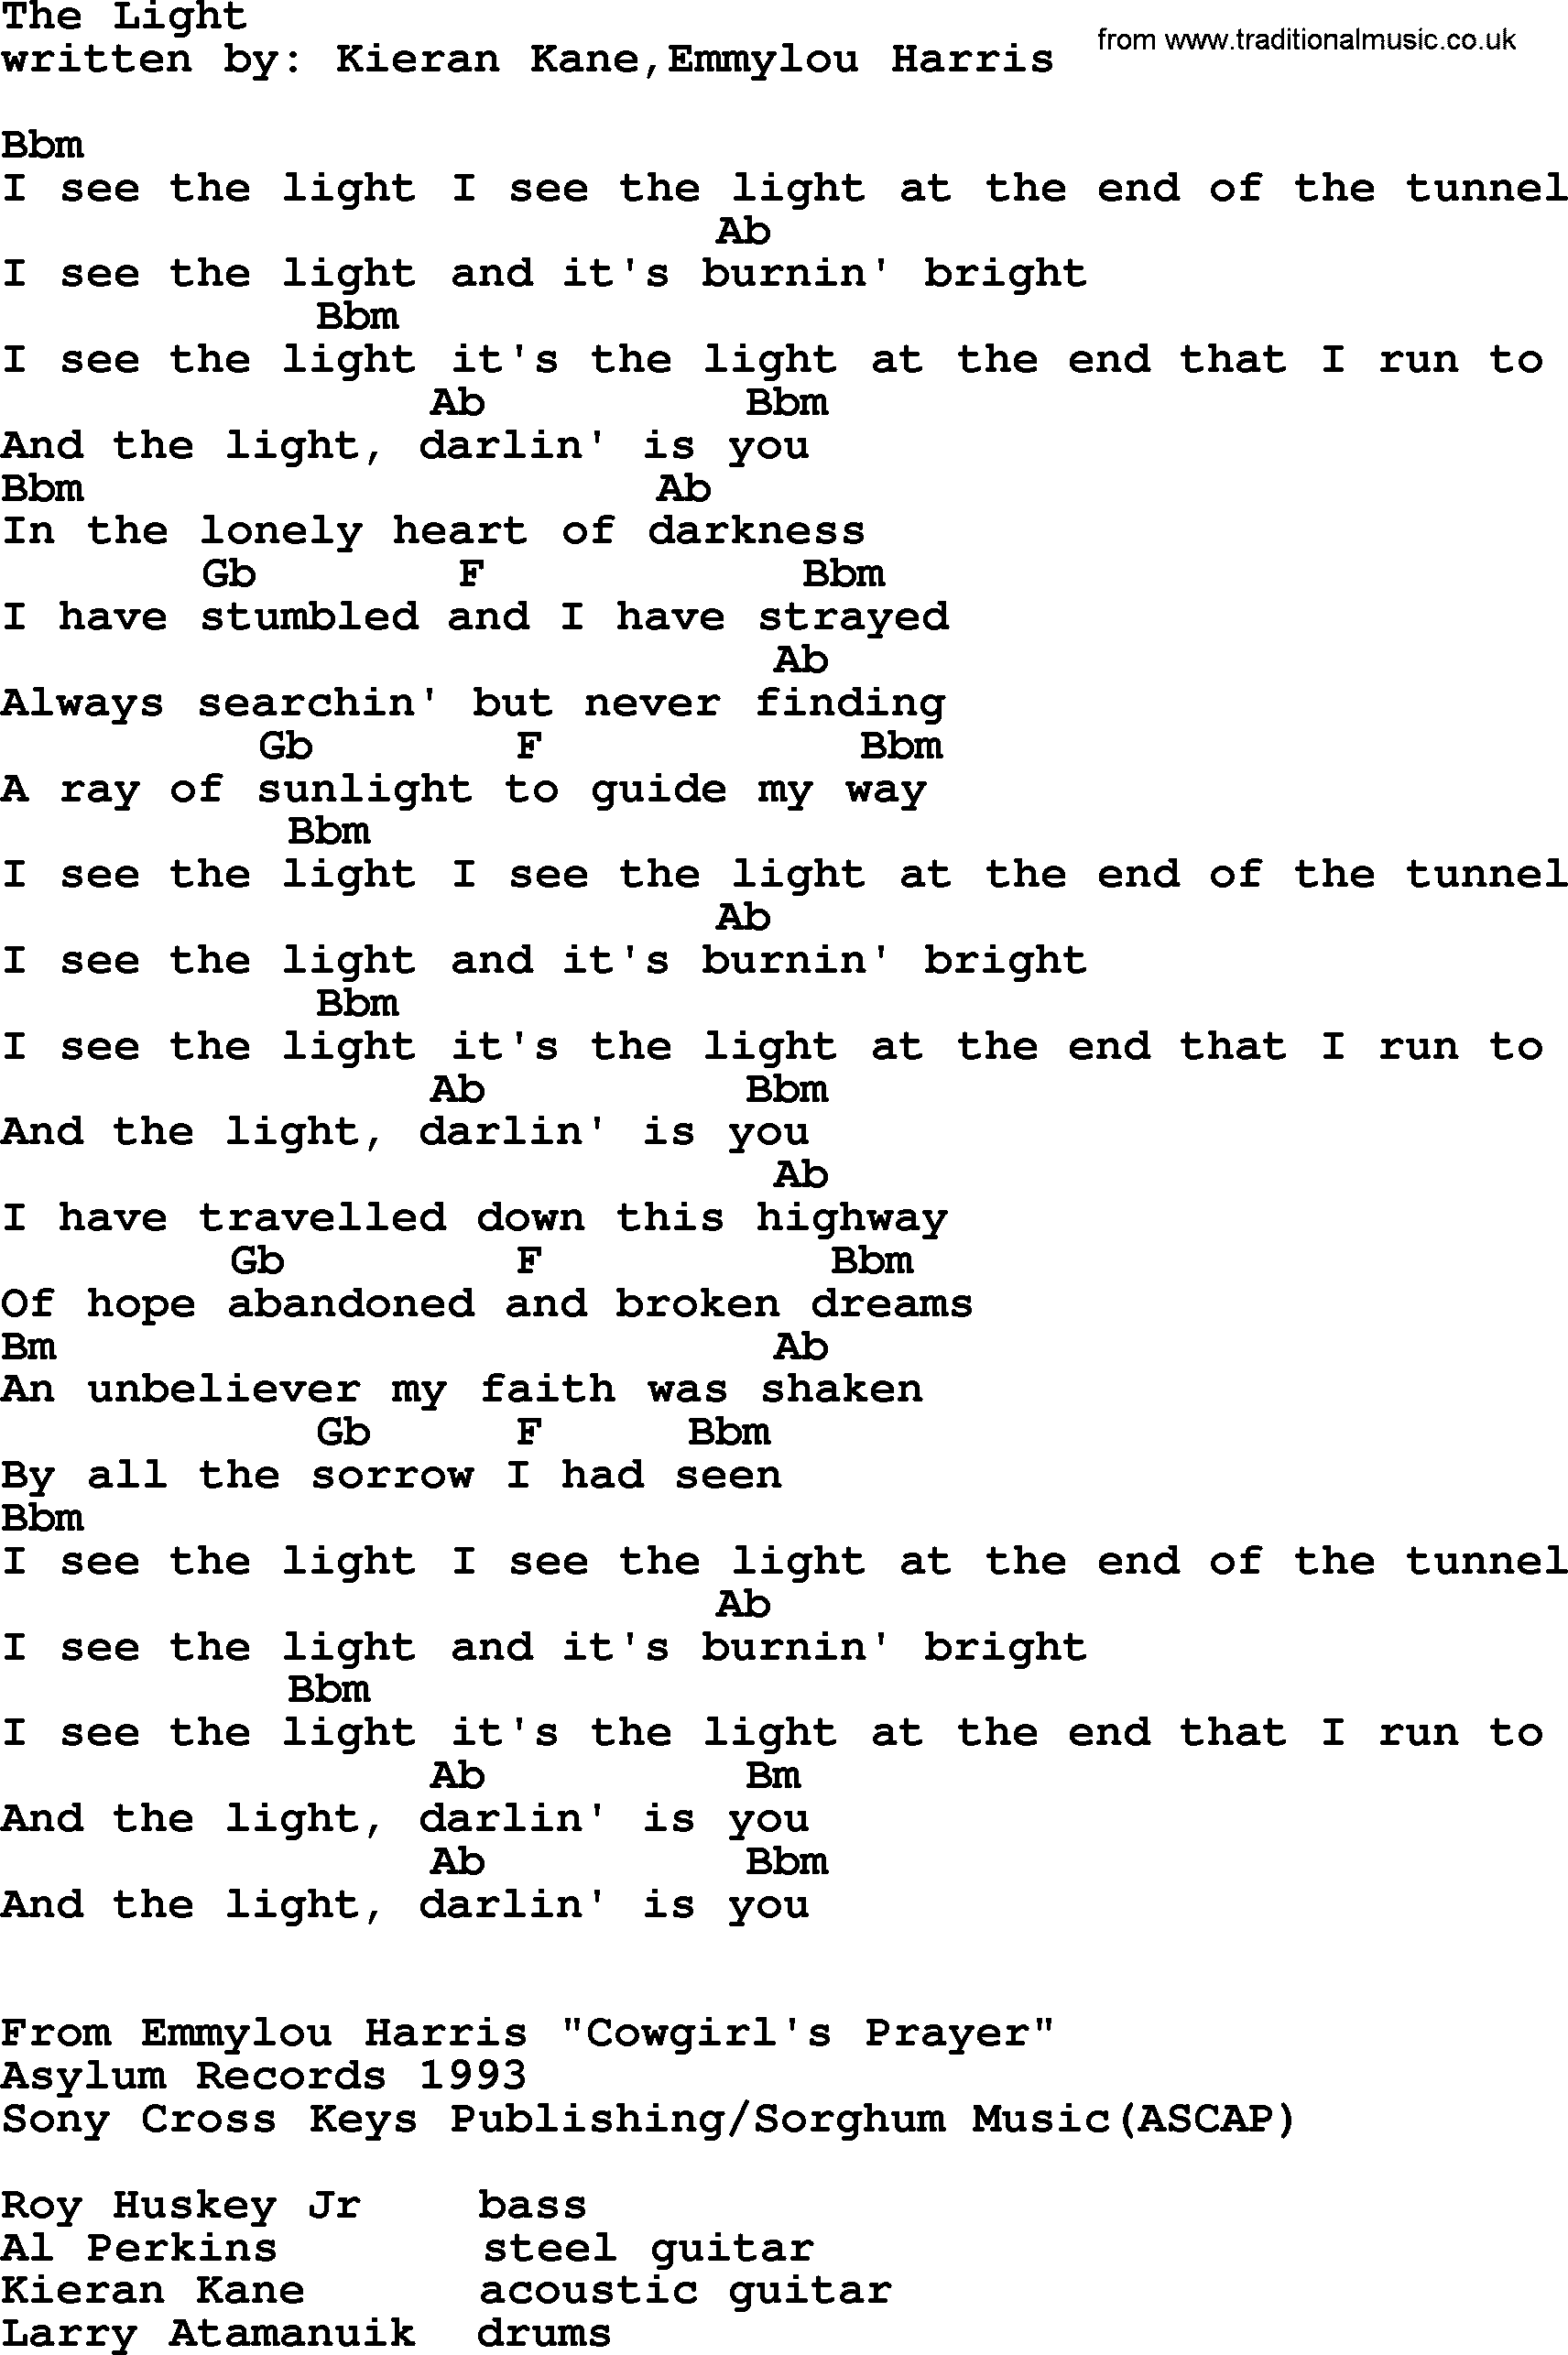 Emmylou Harris song: The Light lyrics and chords